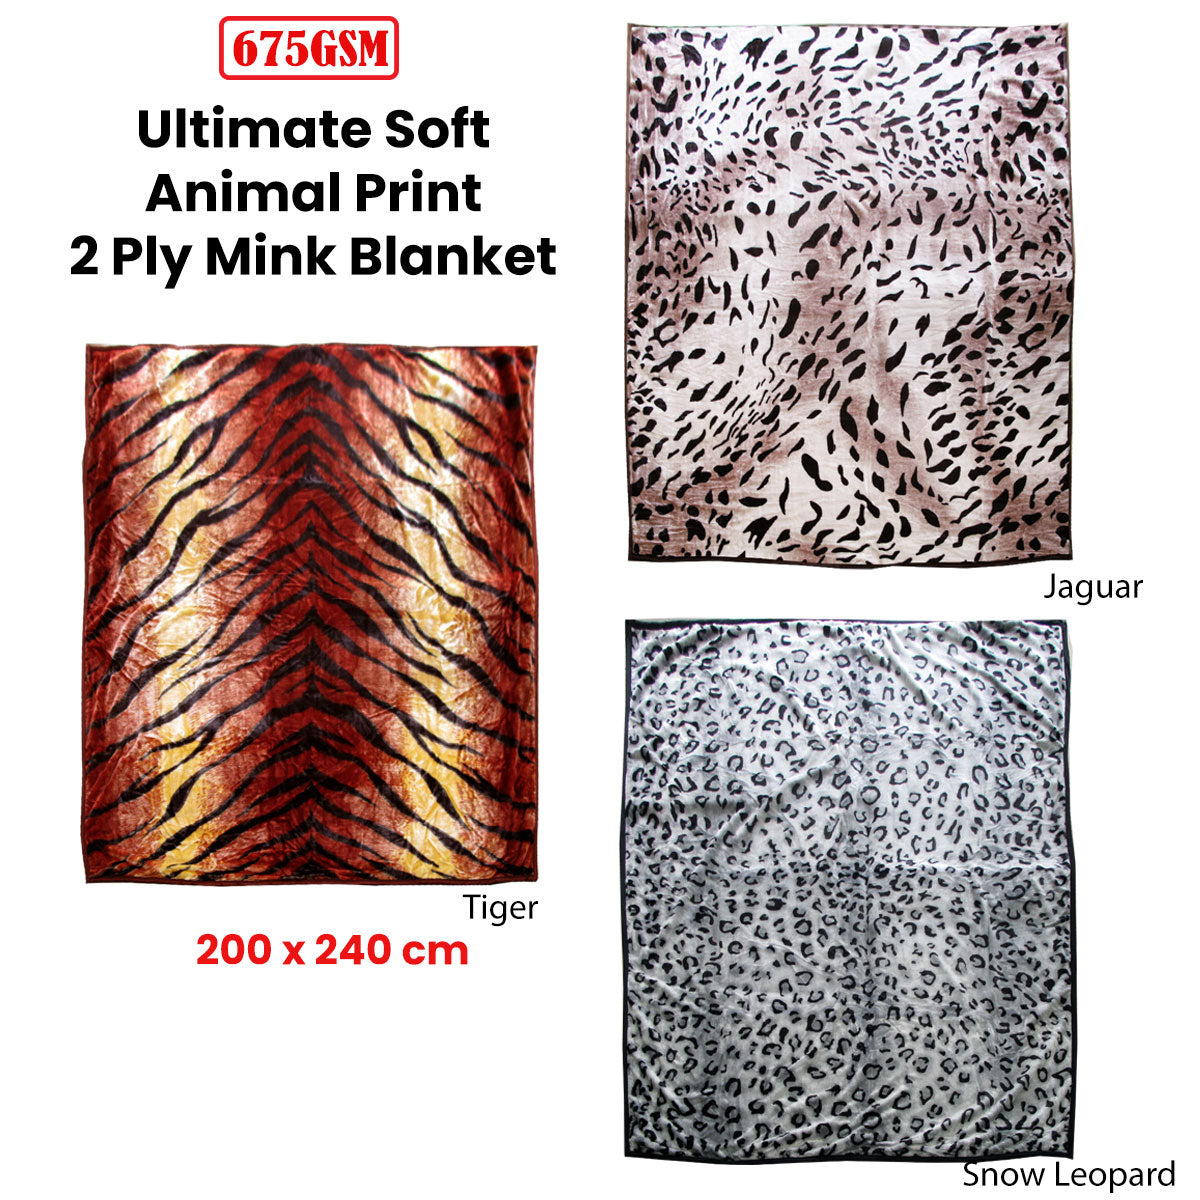 675gsm 2 Ply Animal Print Faux Mink Blanket Queen 200x240 cm Jaguar - Home & Garden > Bedding - Zanlana Design and Home Decor